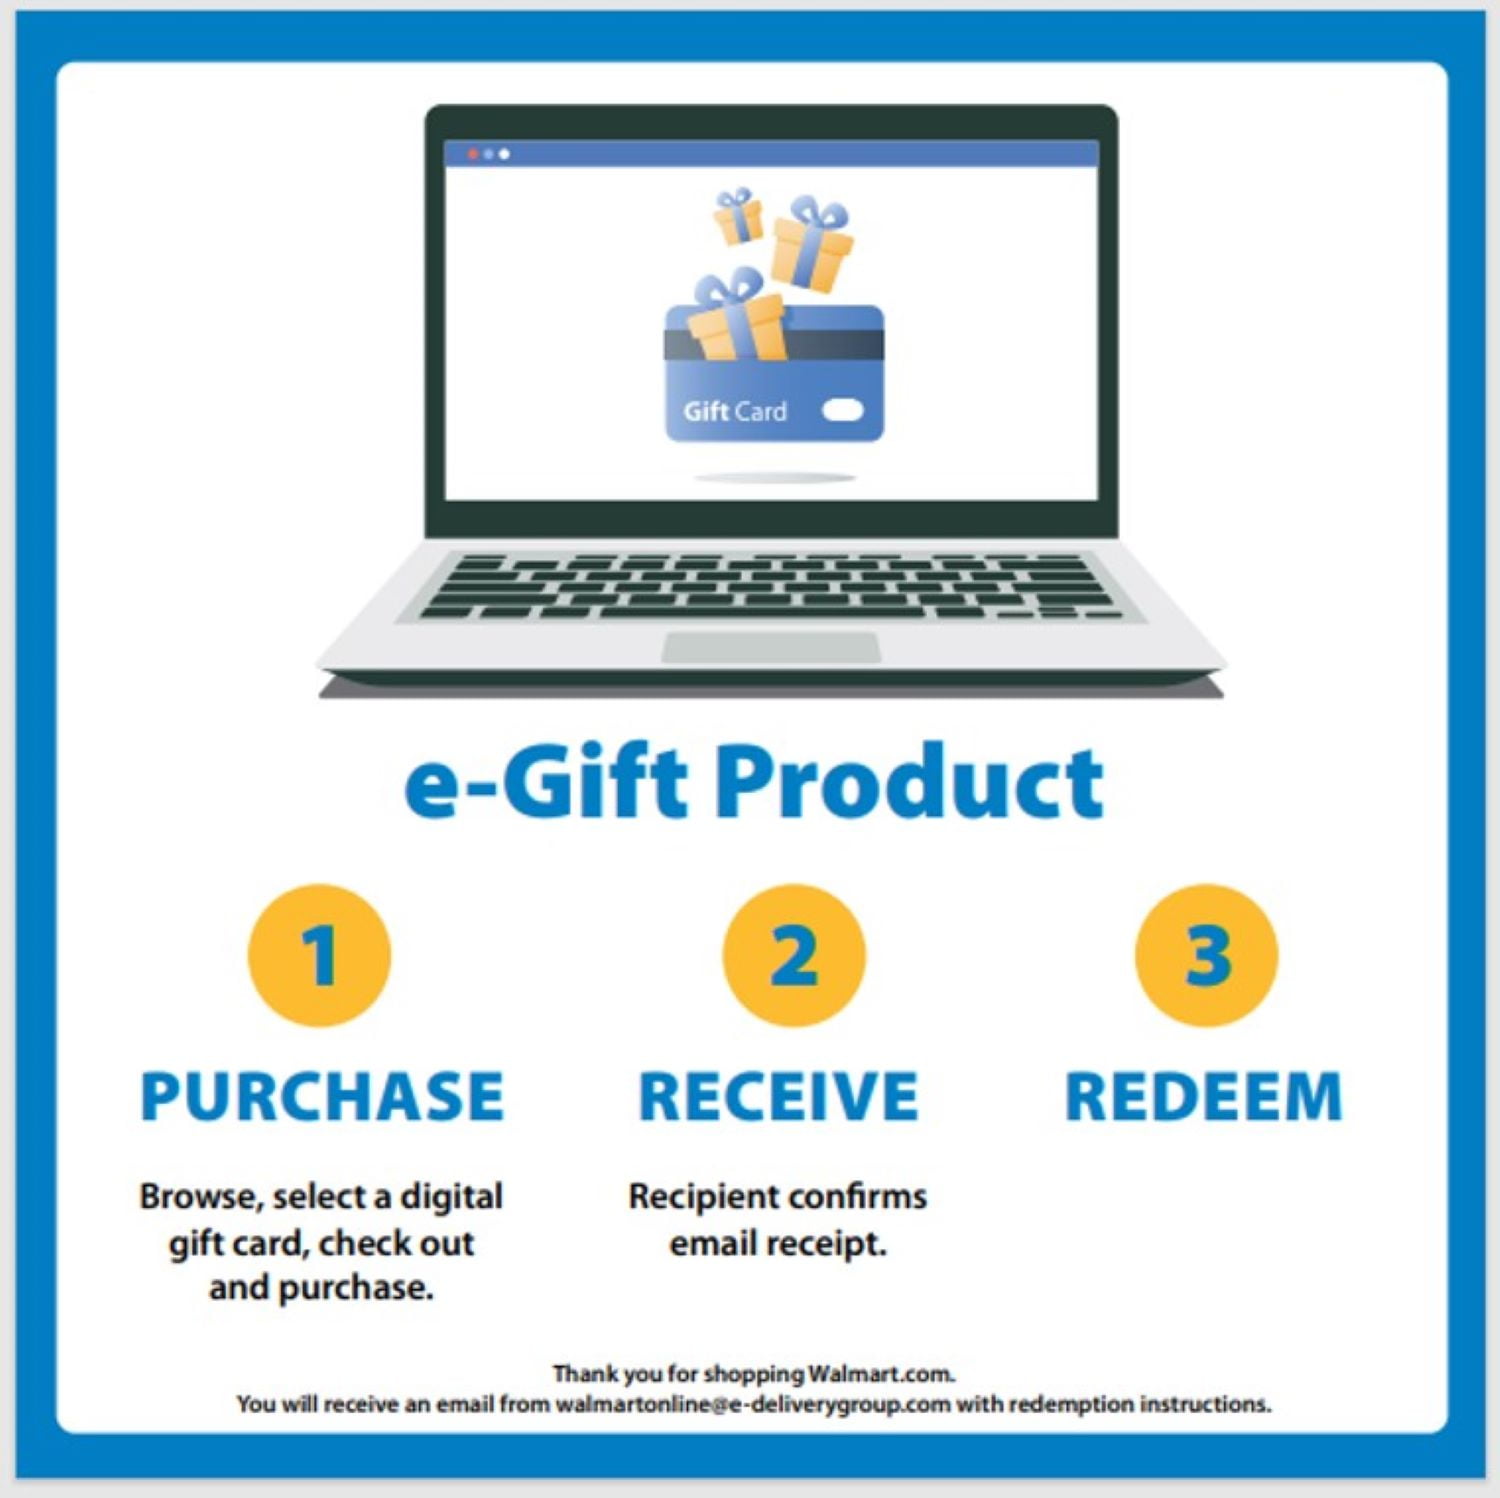 Hooters Gift Card Balance Check | GiftCardGranny